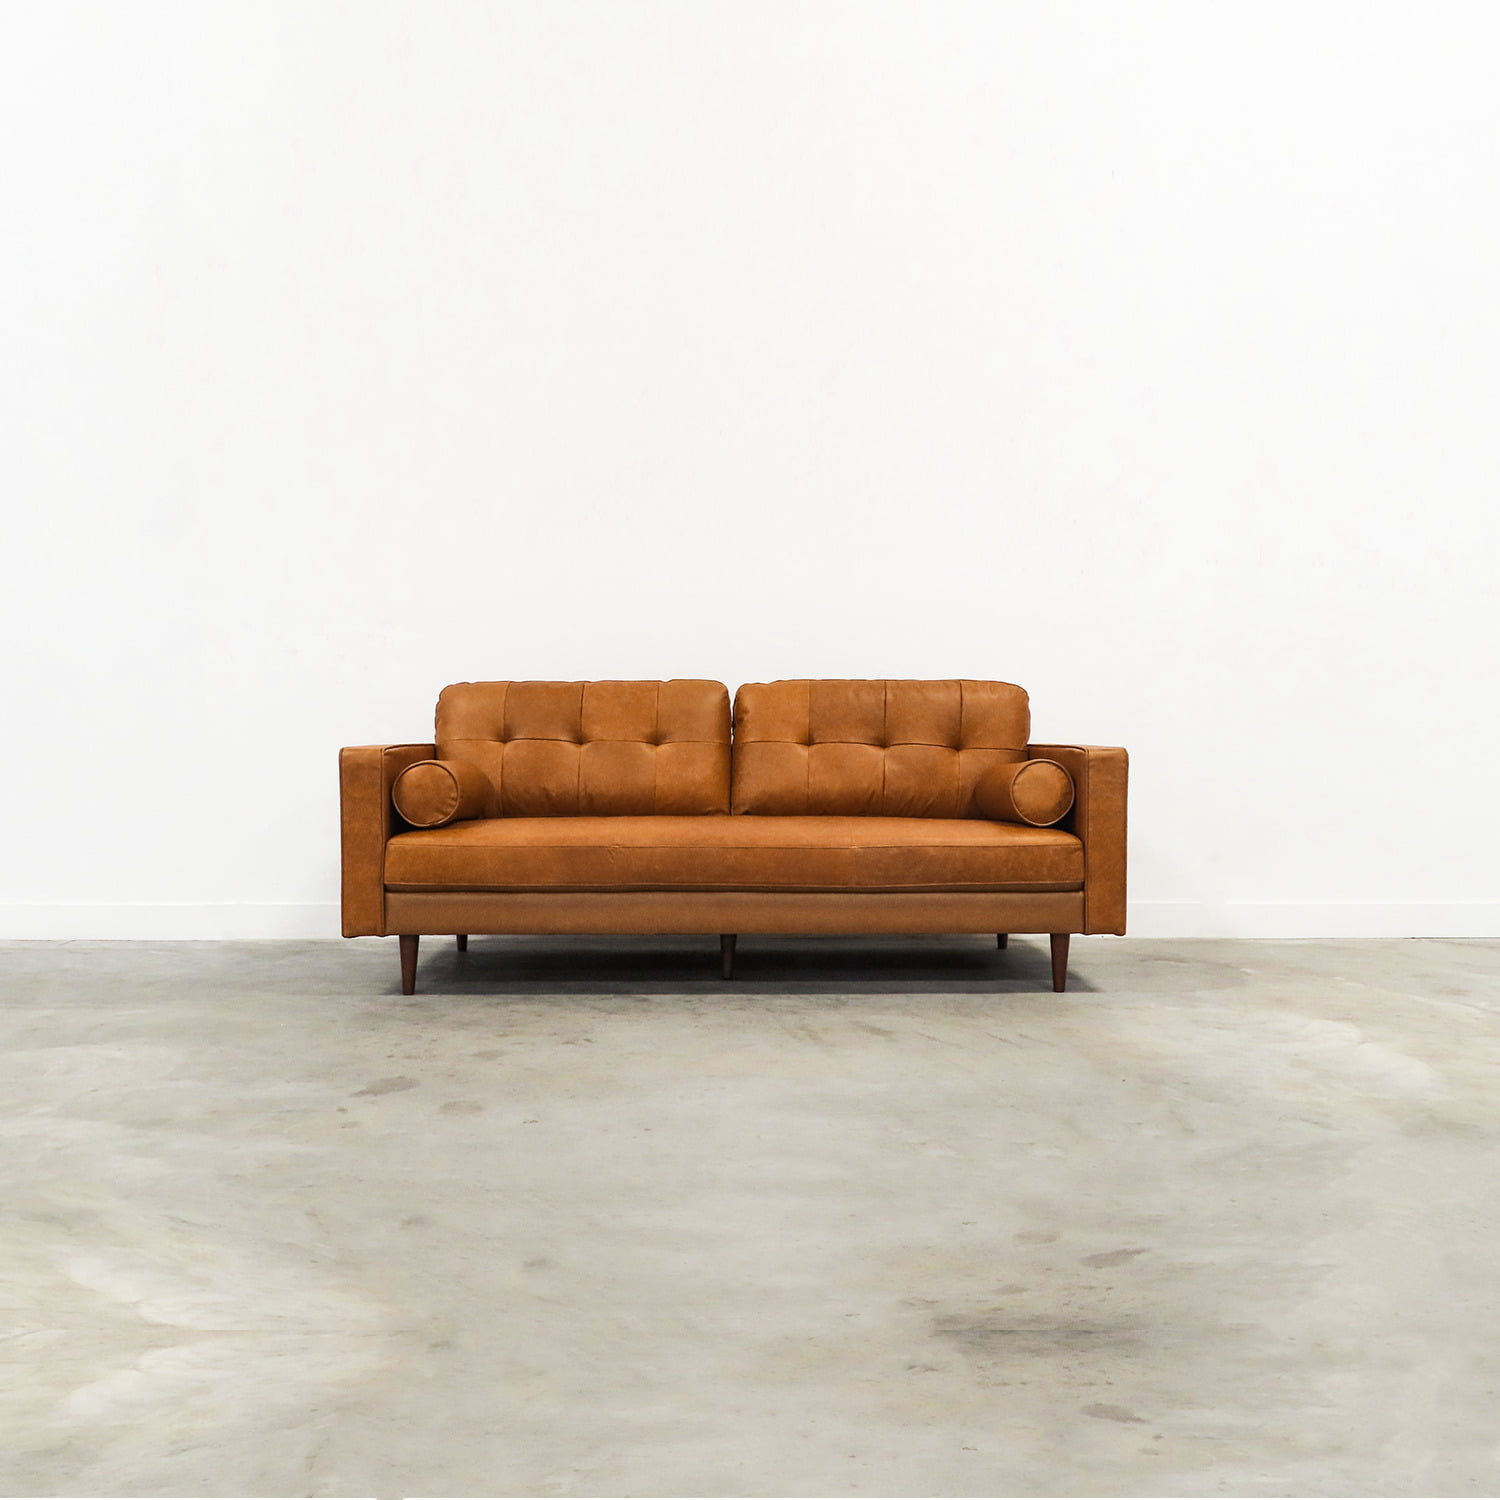 TiffNav Saddle Leather Wallaroo's Furniture Mattresses